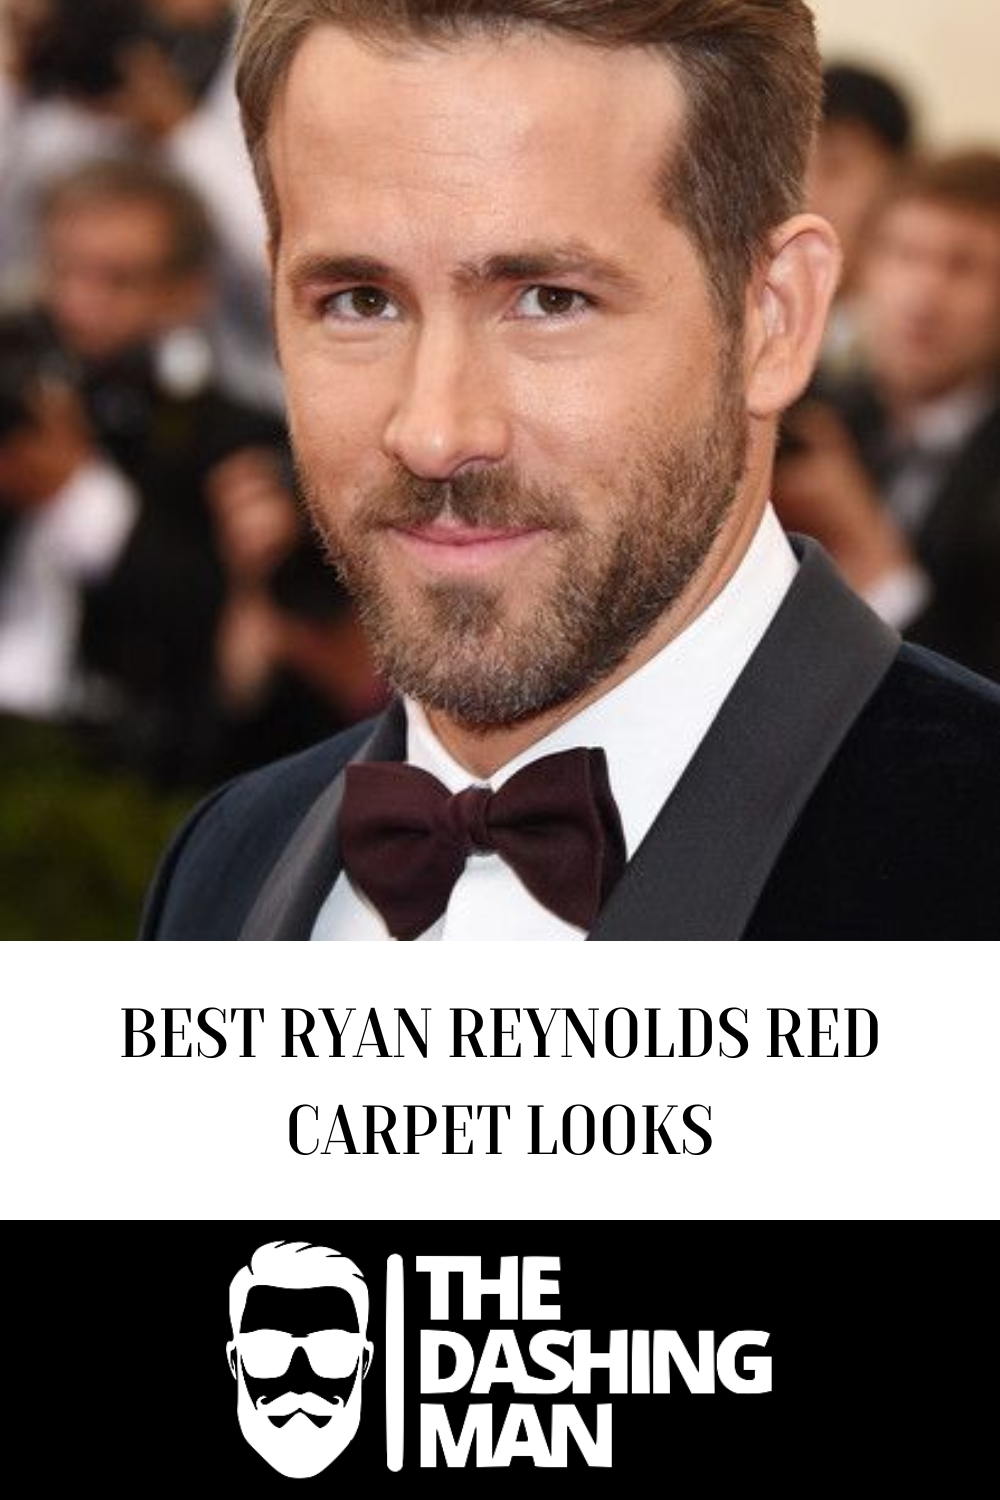 Best Ryan Reynolds Red Carpet Looks